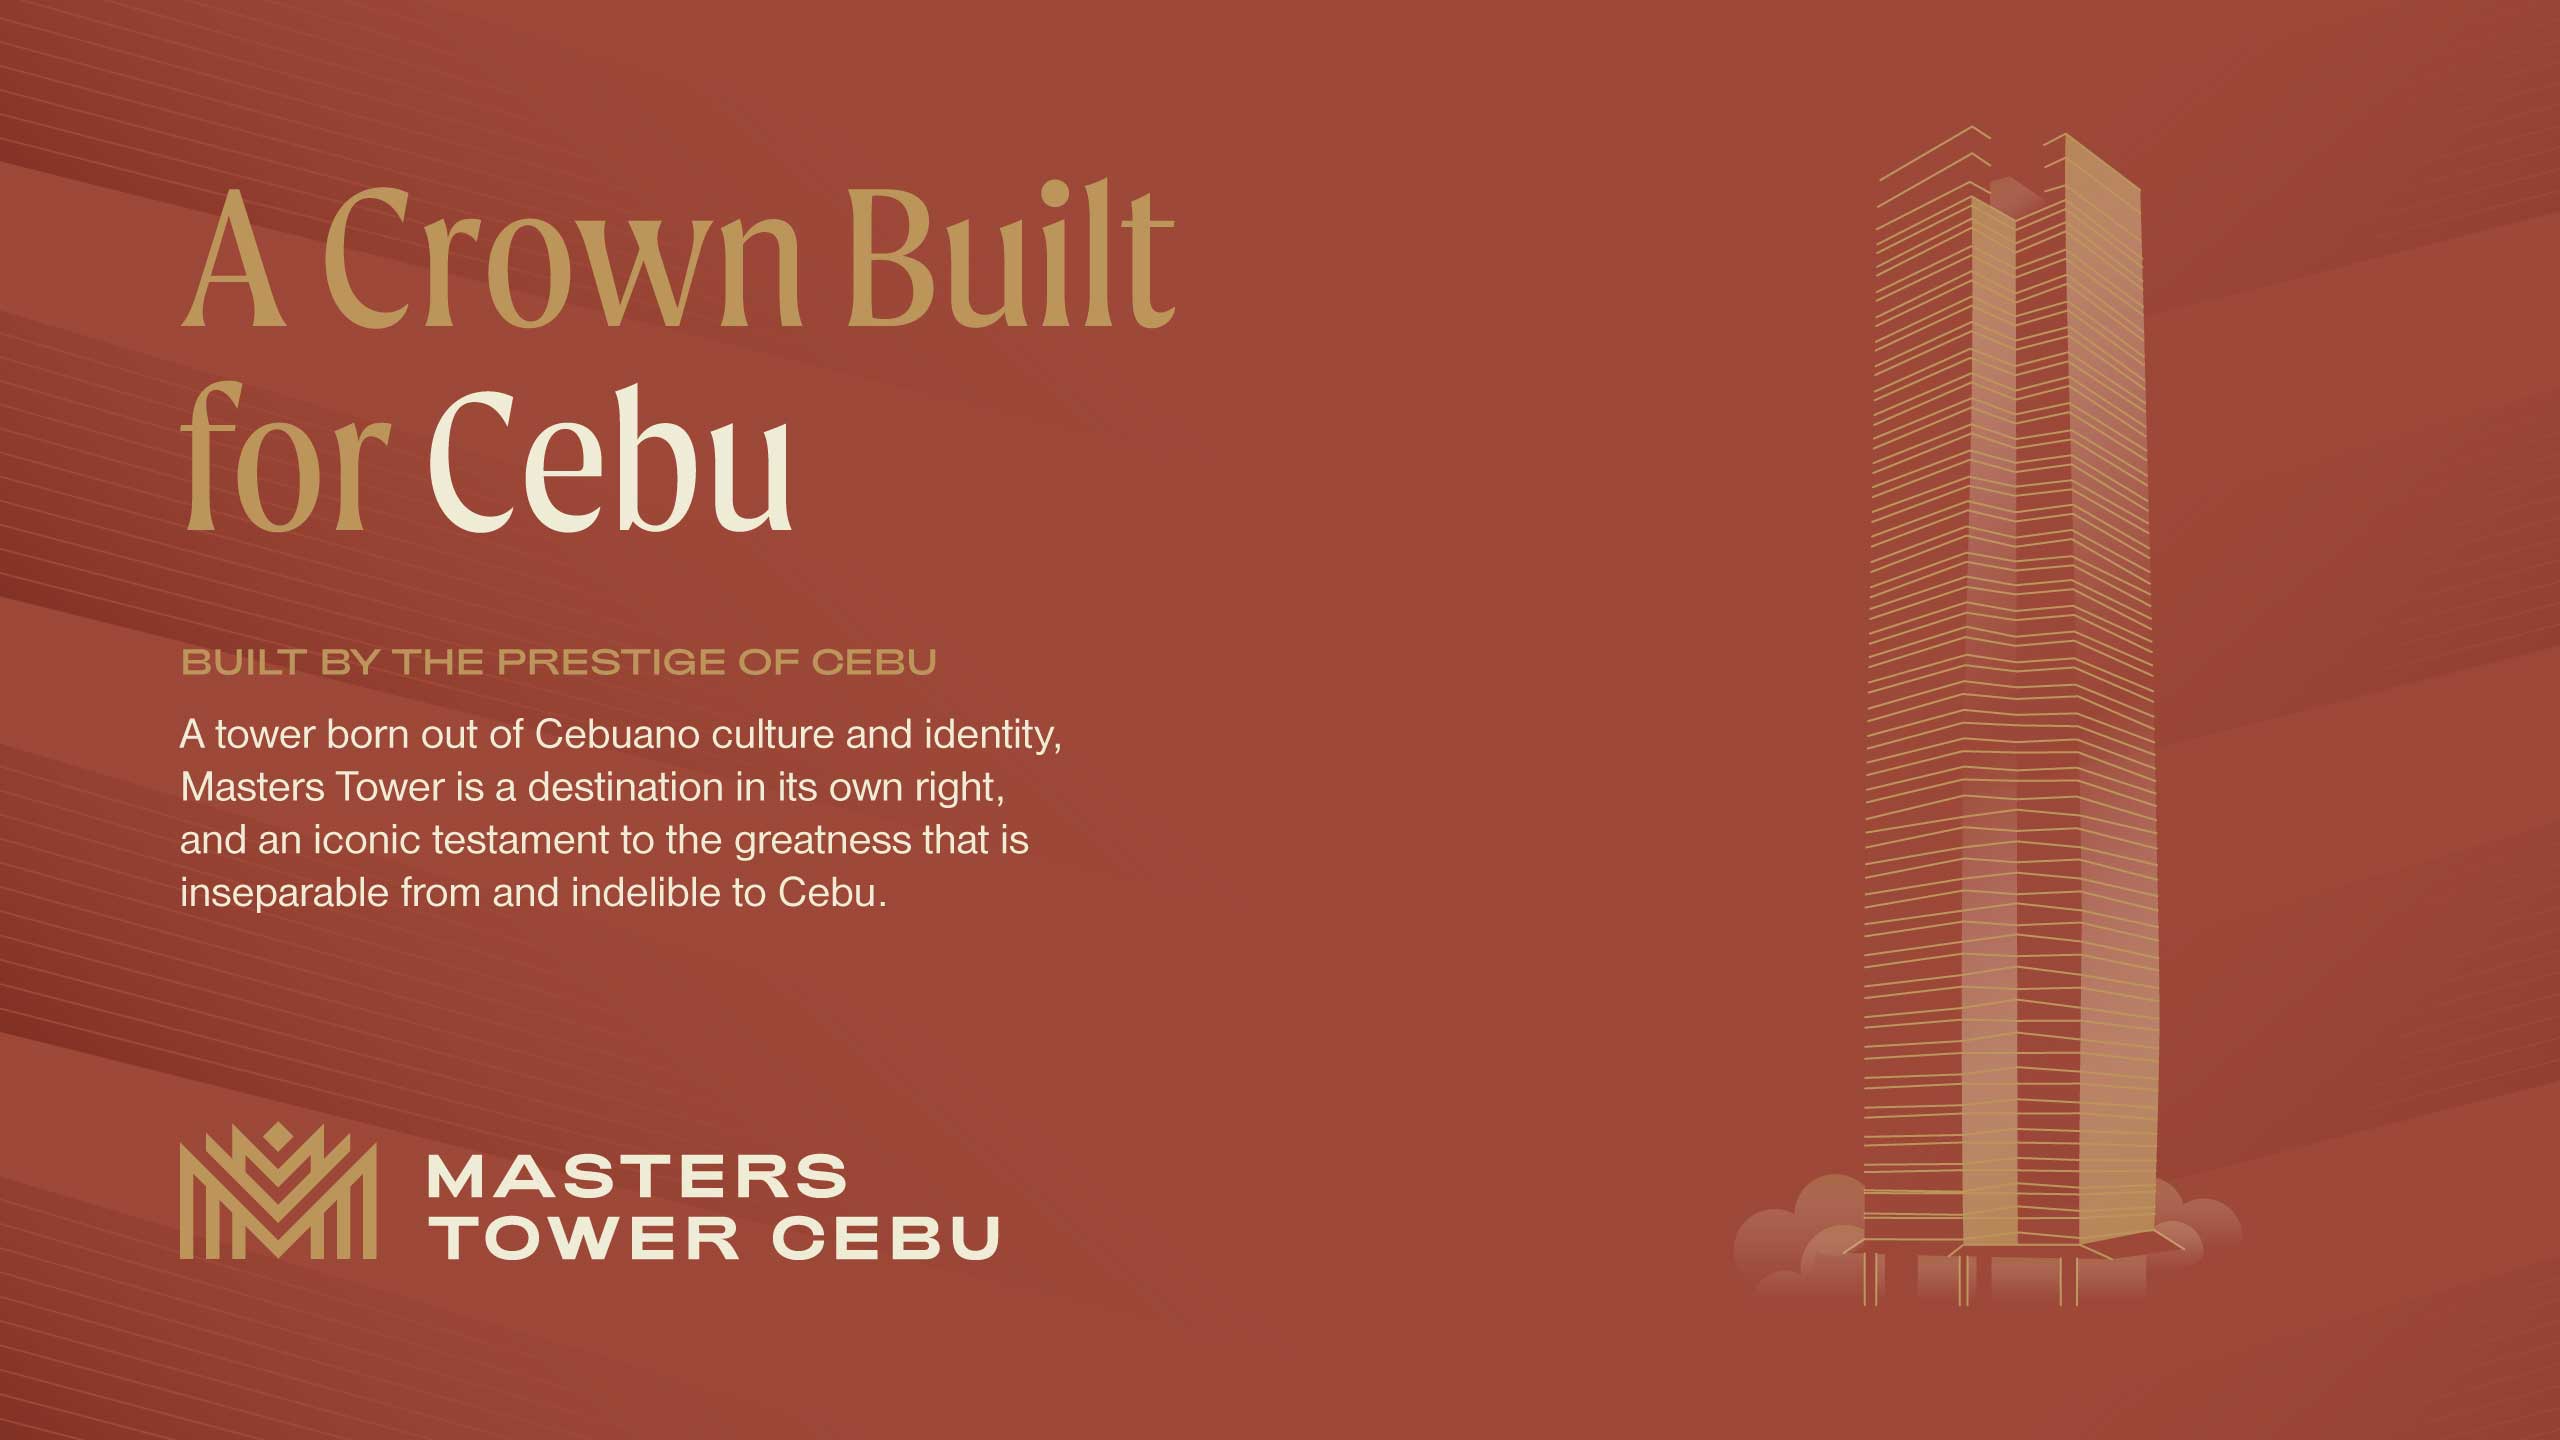 Cebu Landmasters: Master’s Tower